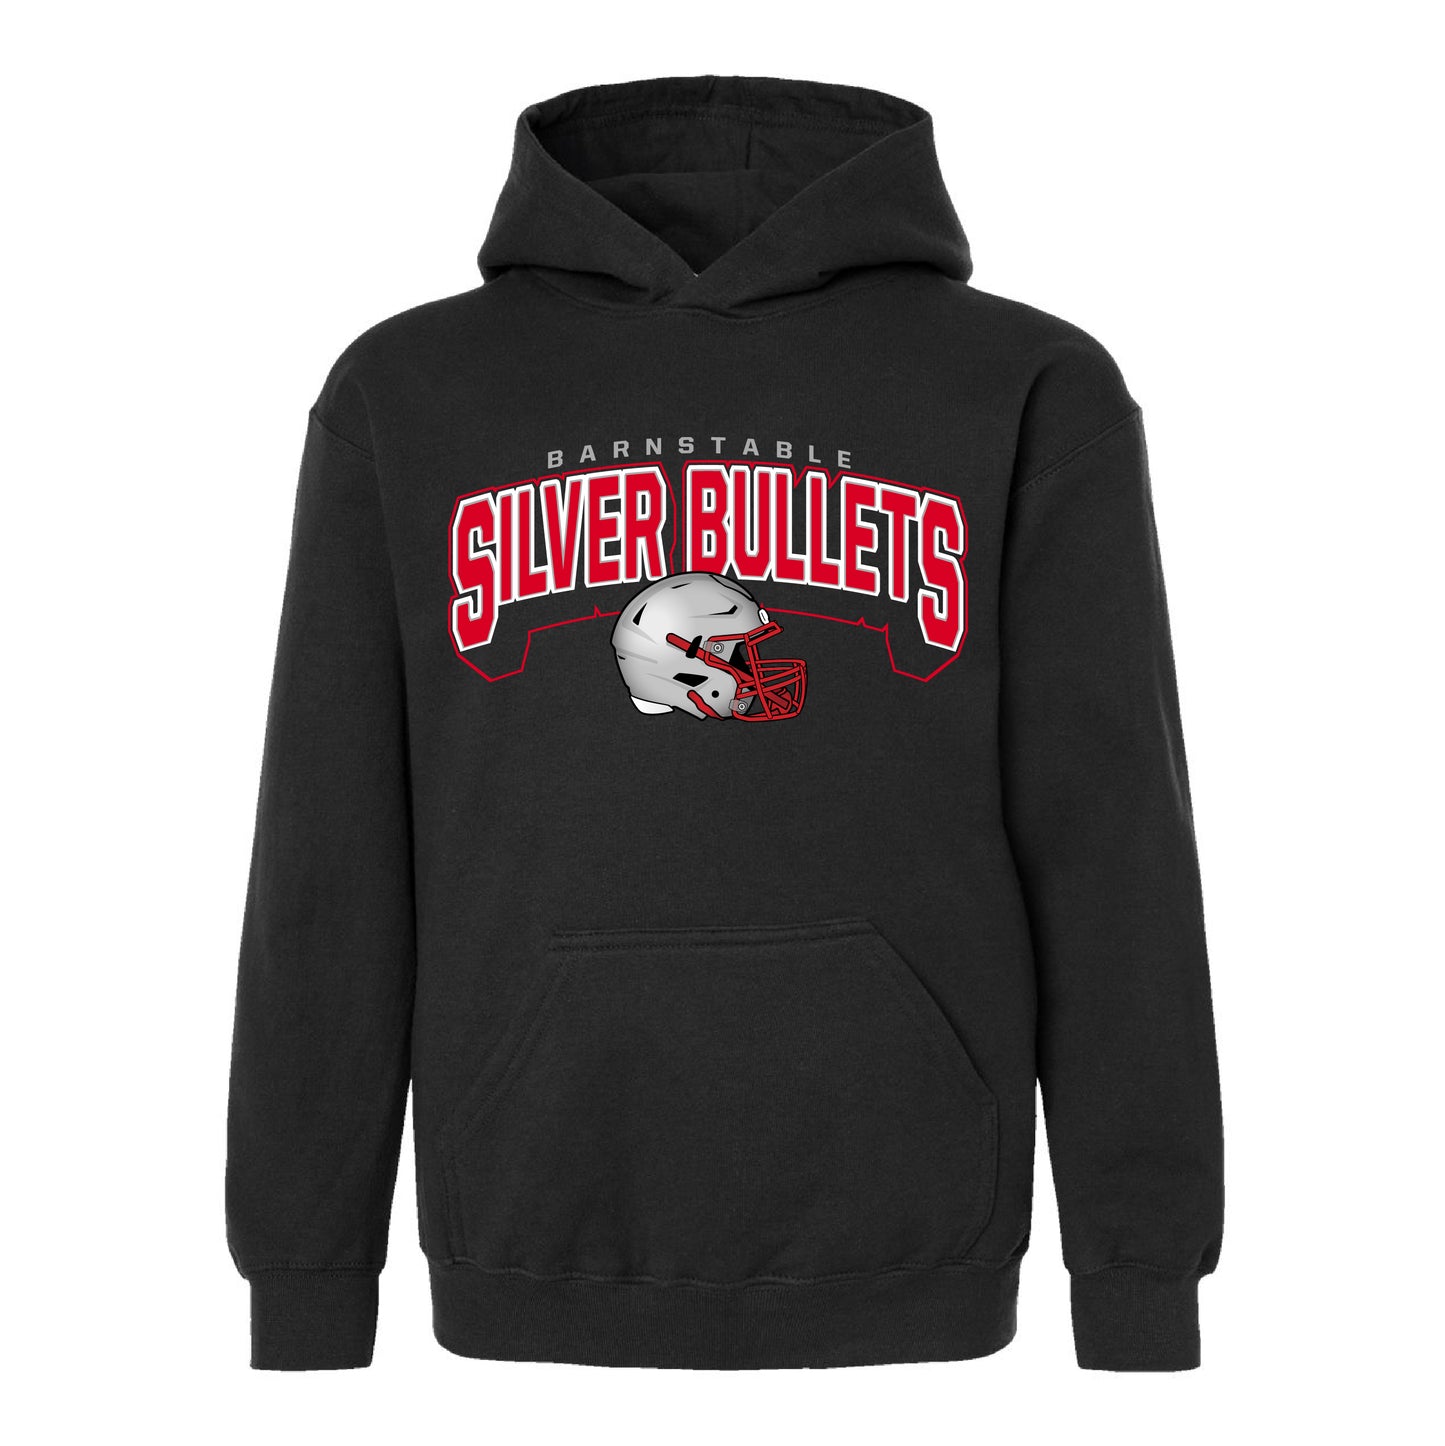 Barnstable Silver Bullets - Youth Hooded Sweatshirt